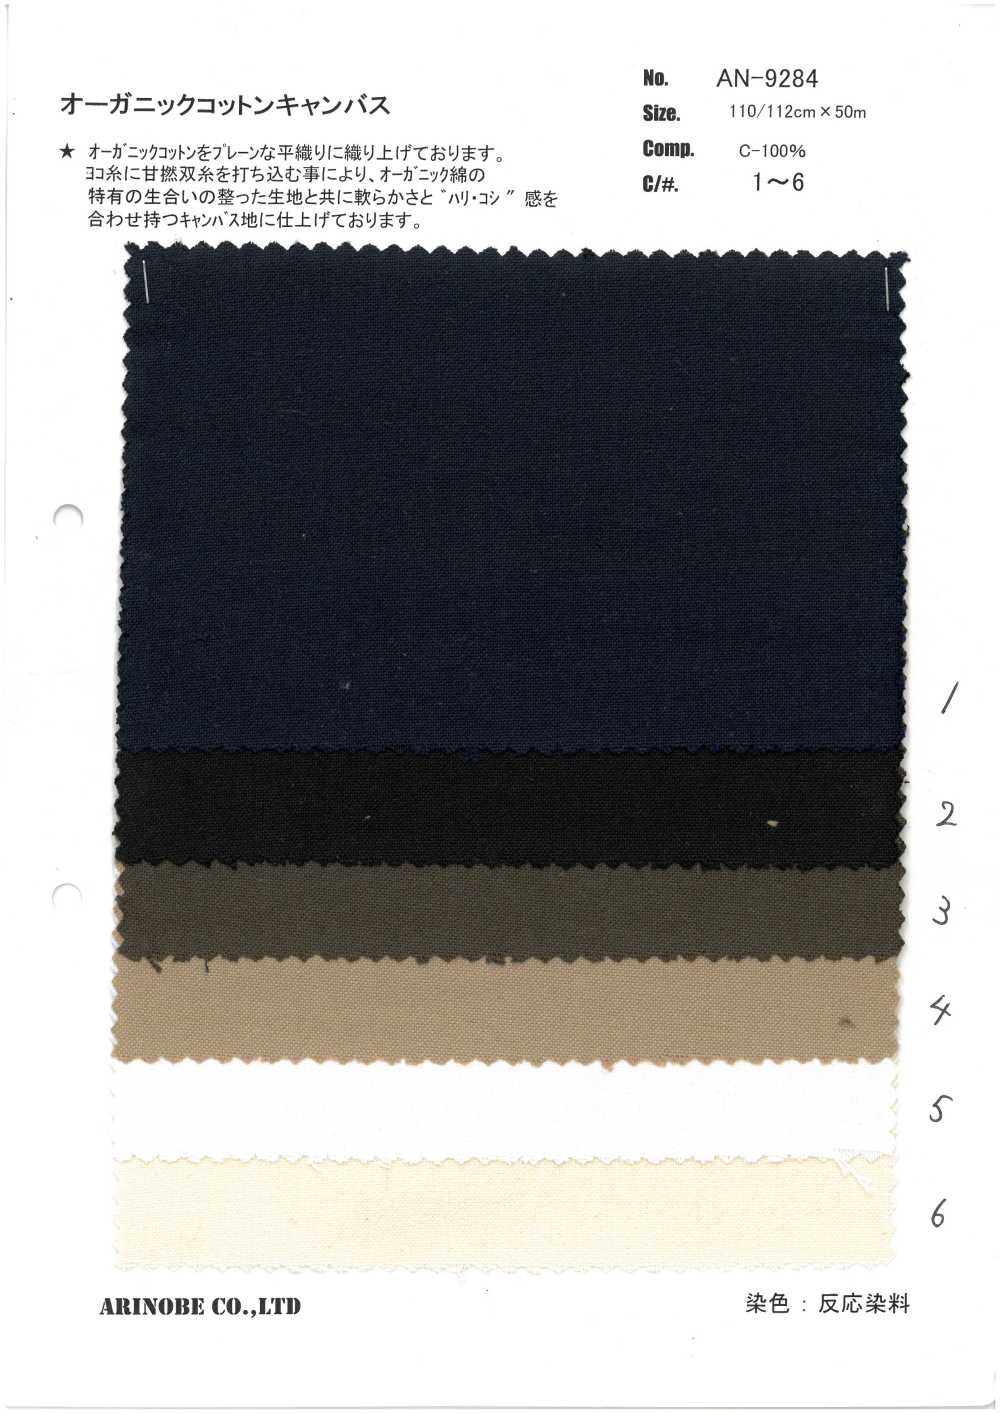 AN-9284 Organic Cotton Canvas[Textile / Fabric] ARINOBE CO., LTD.